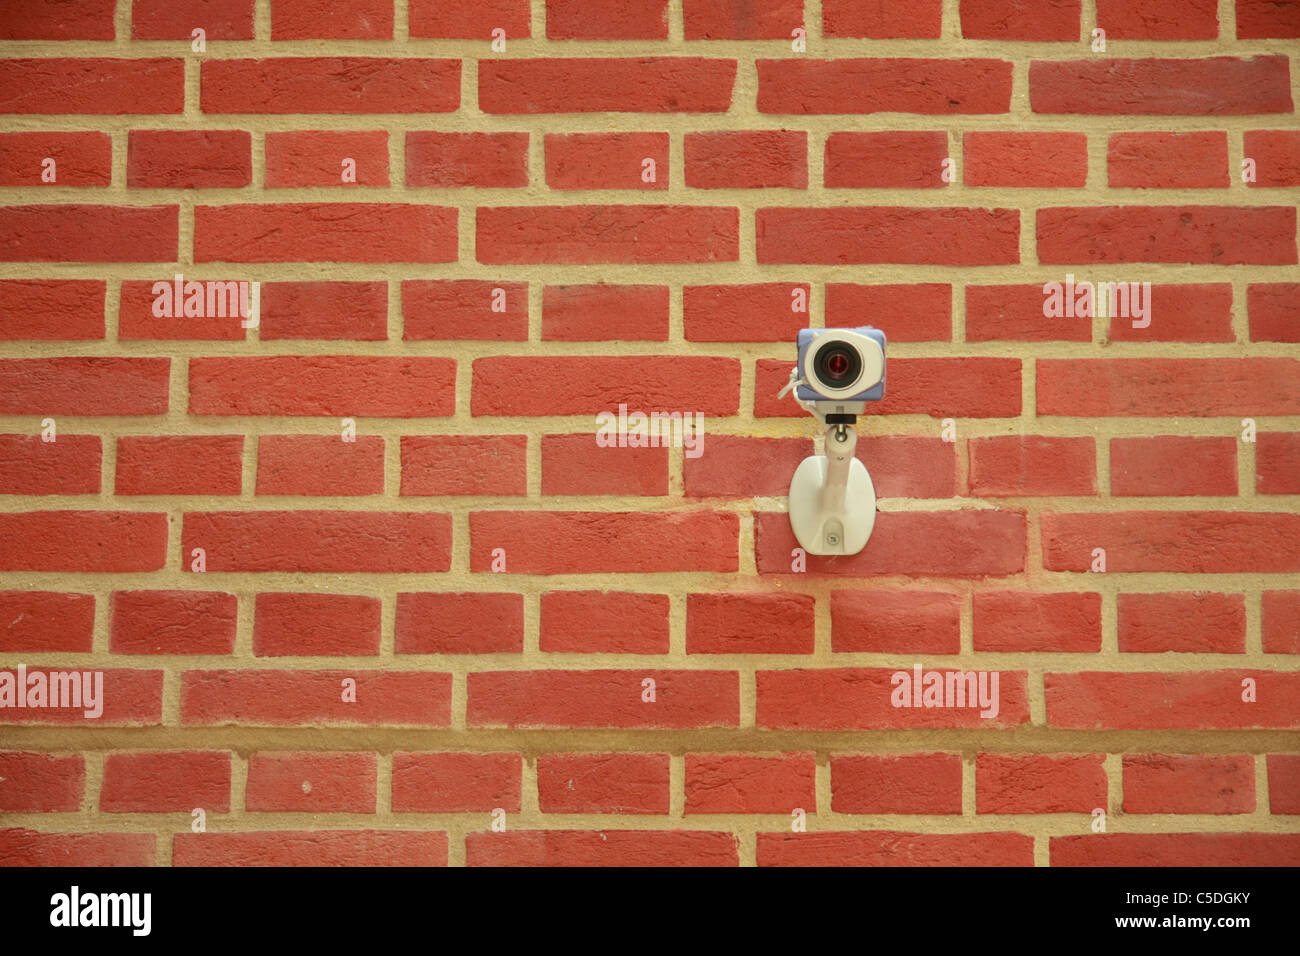 Brick wall with CCTV camera Stock Photo